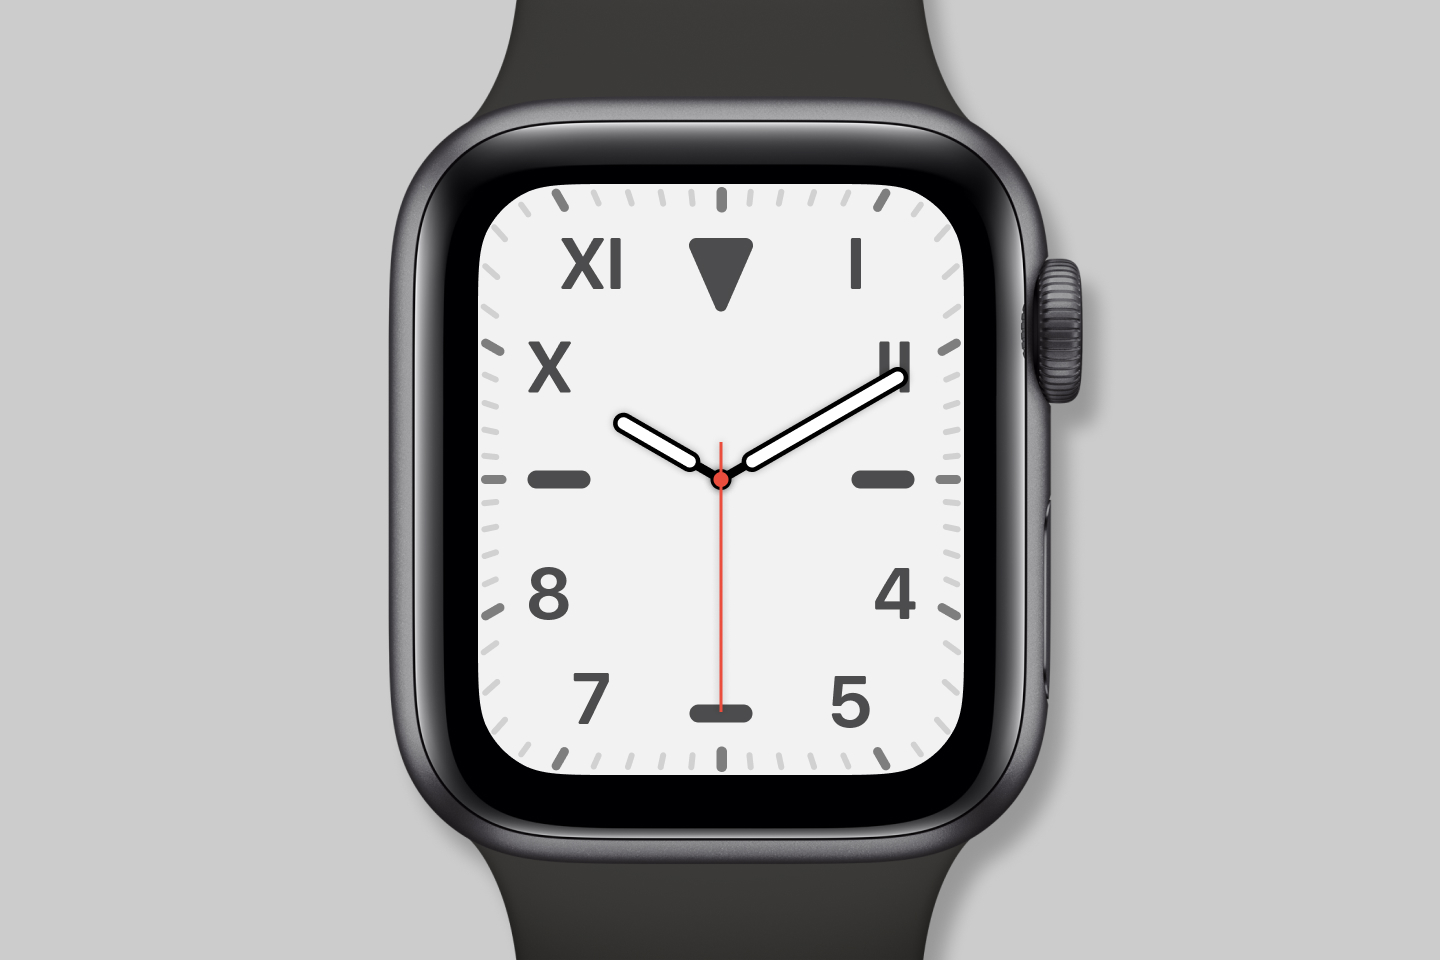 Циферблат часов на айфоне. Циферблаты для Apple IWATCH 3. Циферблаты Apple watch Series 7. Циферблат часов Apple IWATCH 6. Циферблаты для Apple IWATCH 7.